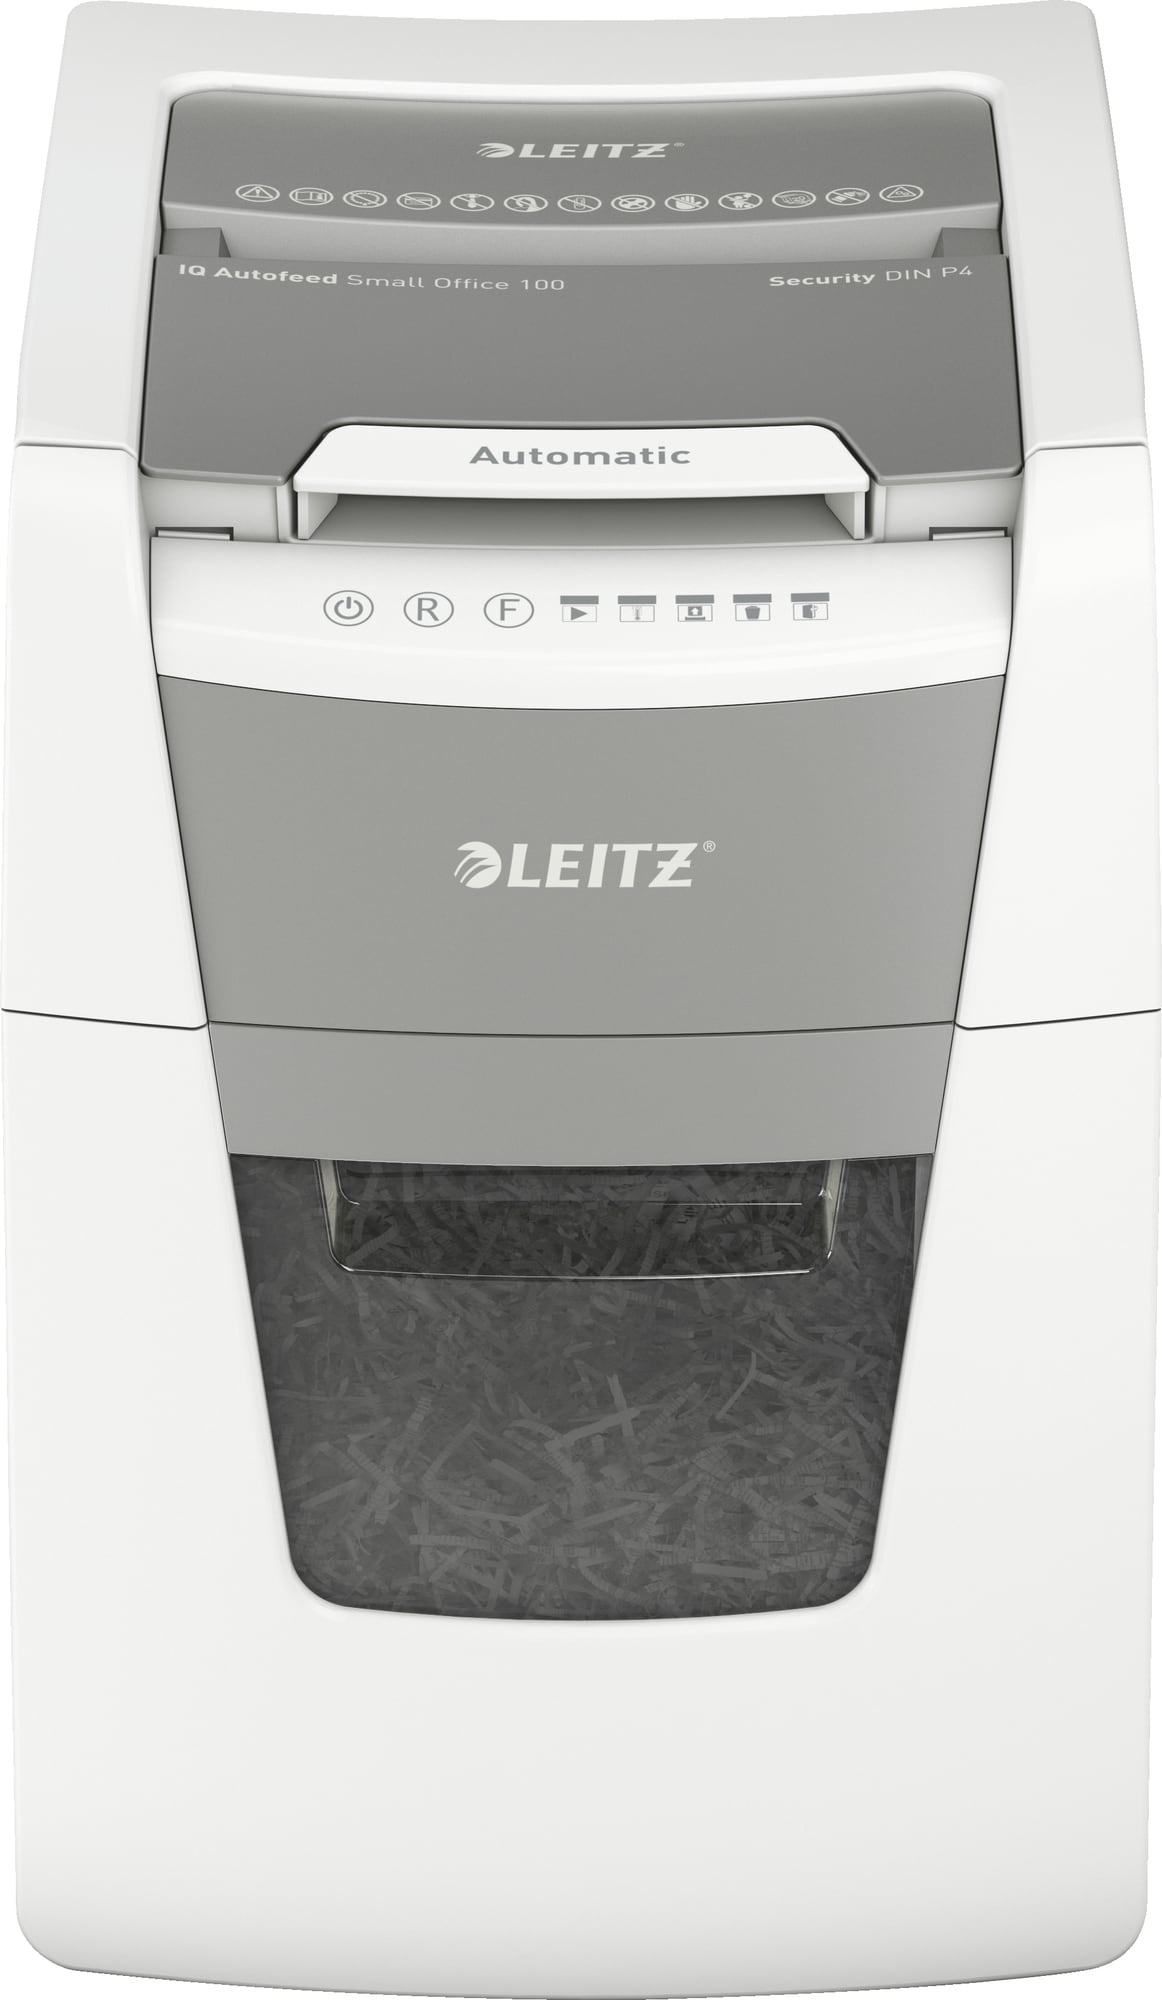 Leitz IQ AutoFeed SmallOffice 100 P4 makuleringsmaskin (krysskutt) - Elkjøp